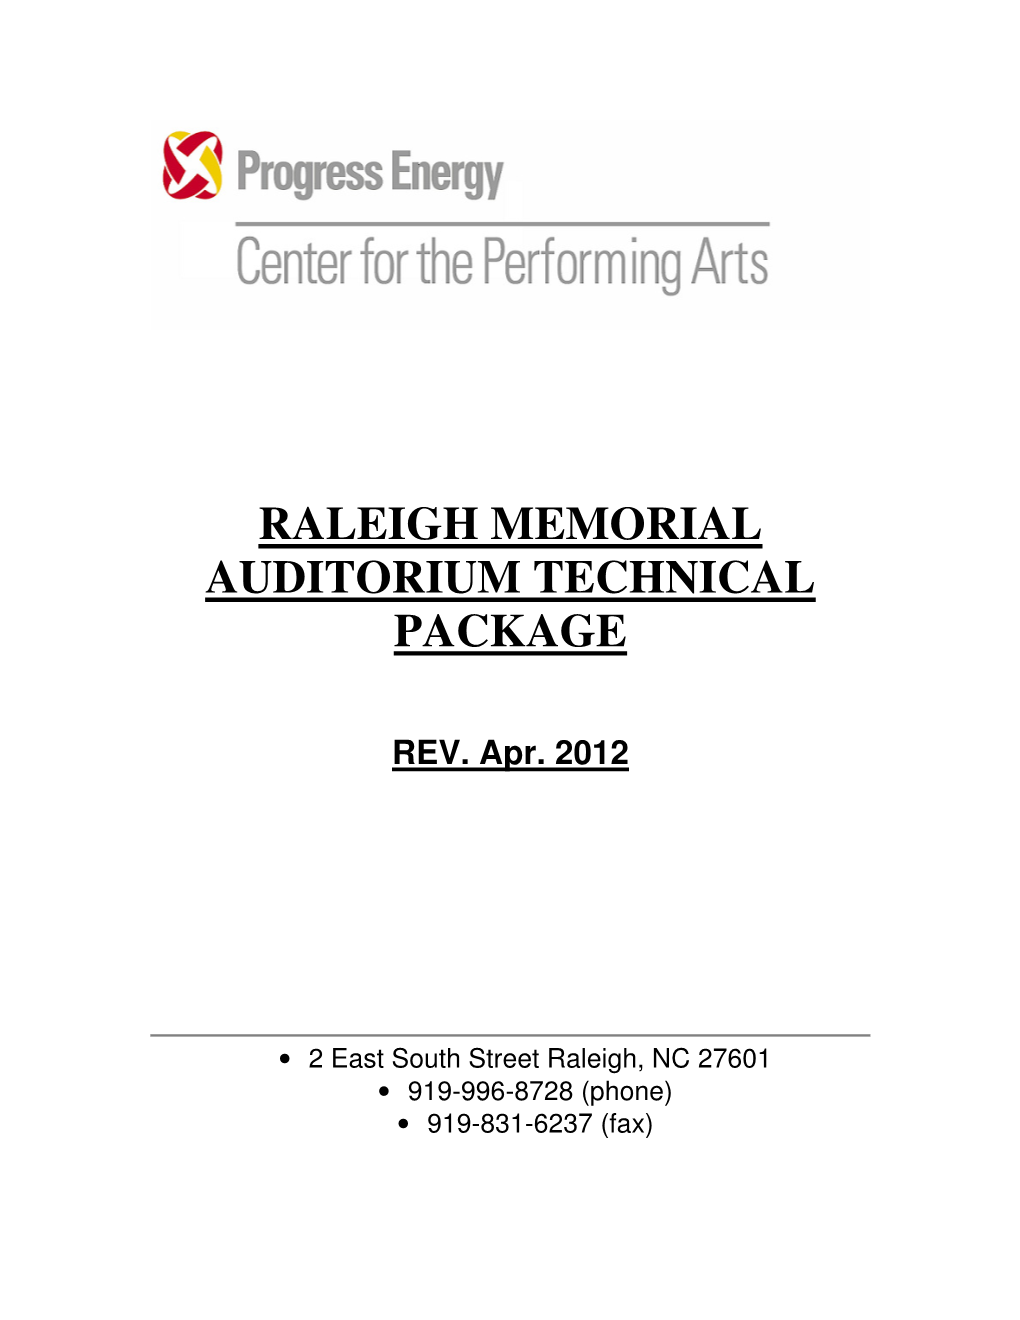 Raleigh Memorial Auditorium Technical Package